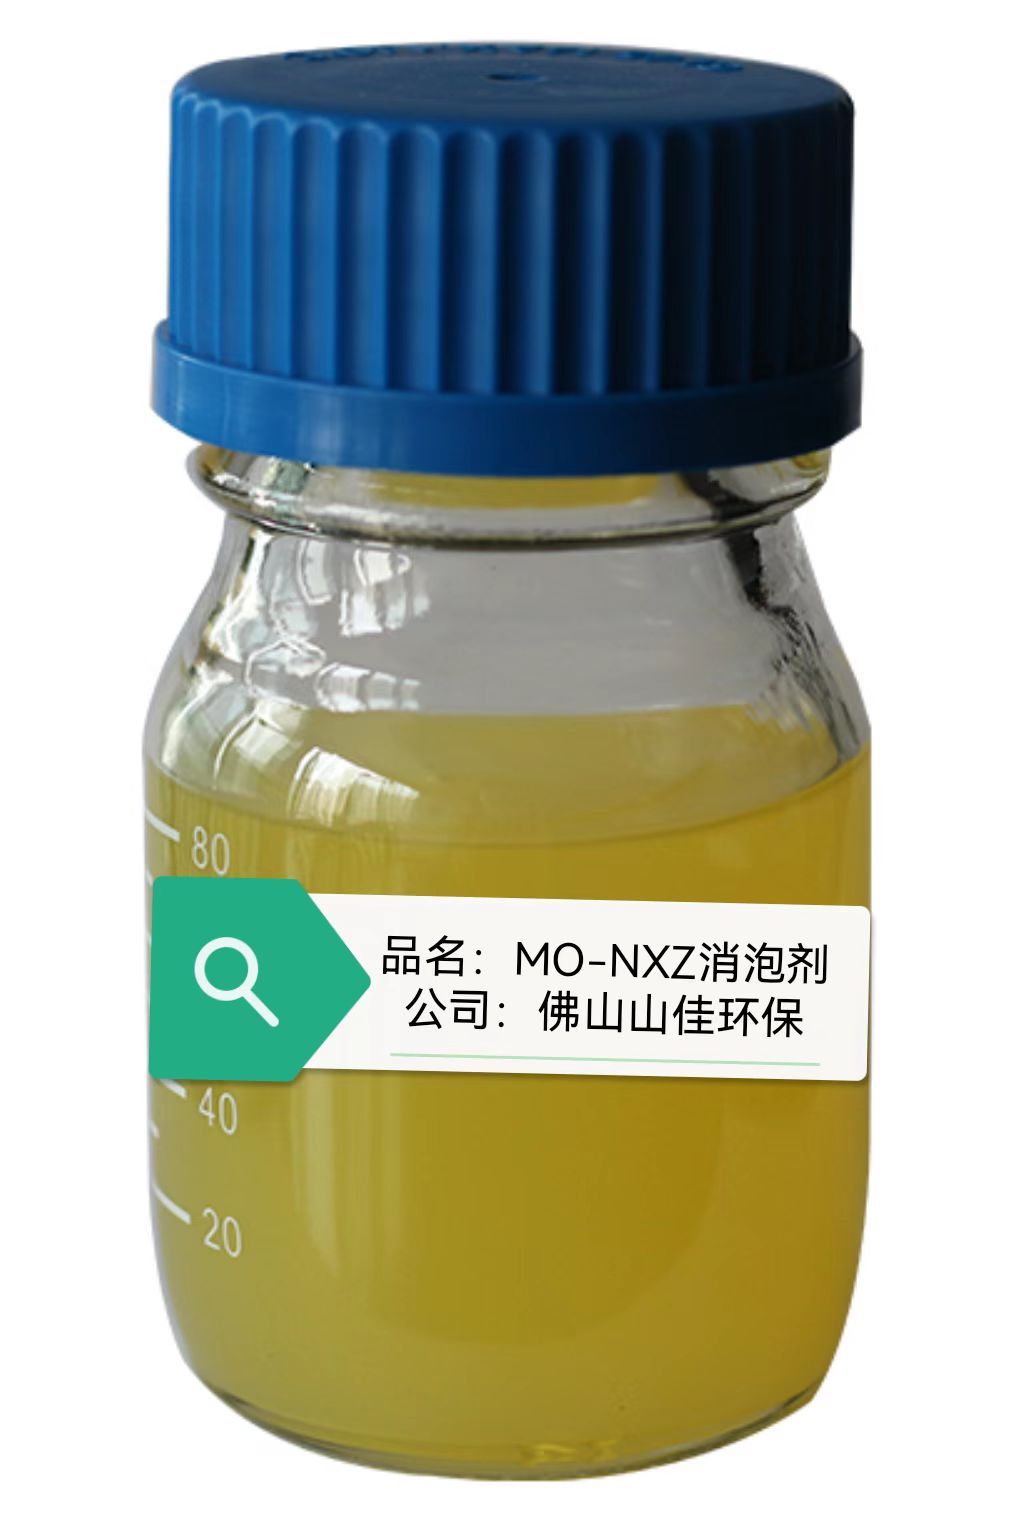 MO-NXZ消泡剂